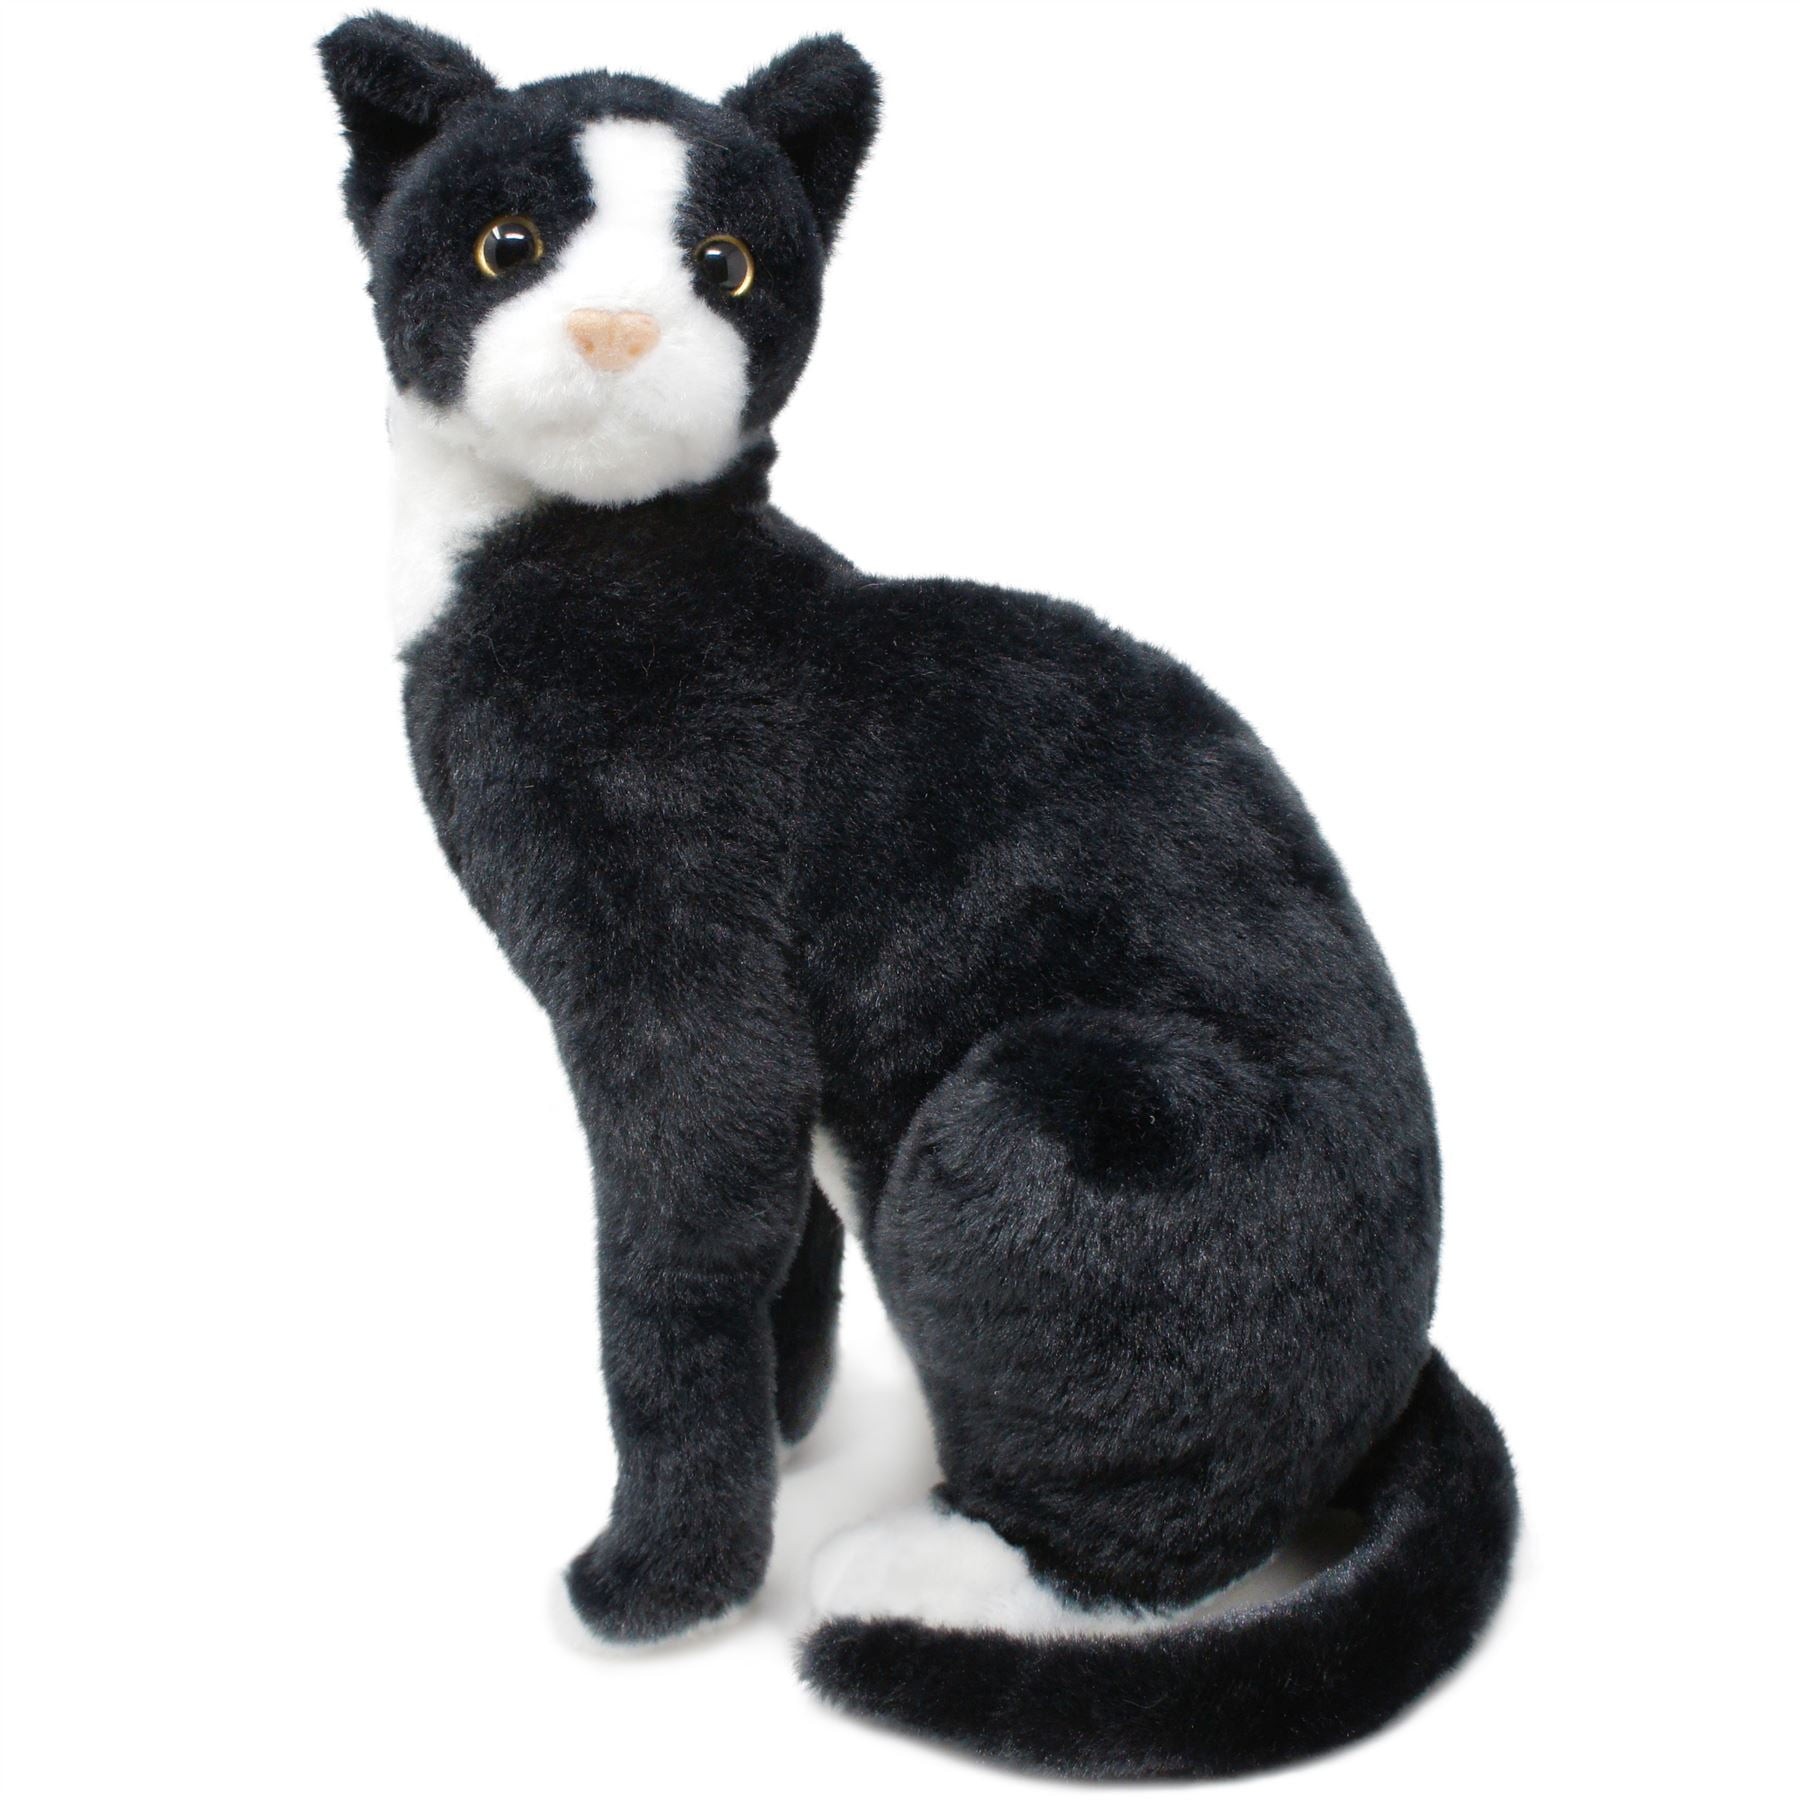 Sweetheart Friends 10" Black/White Cat With Heart on Side Stuffed Plush 